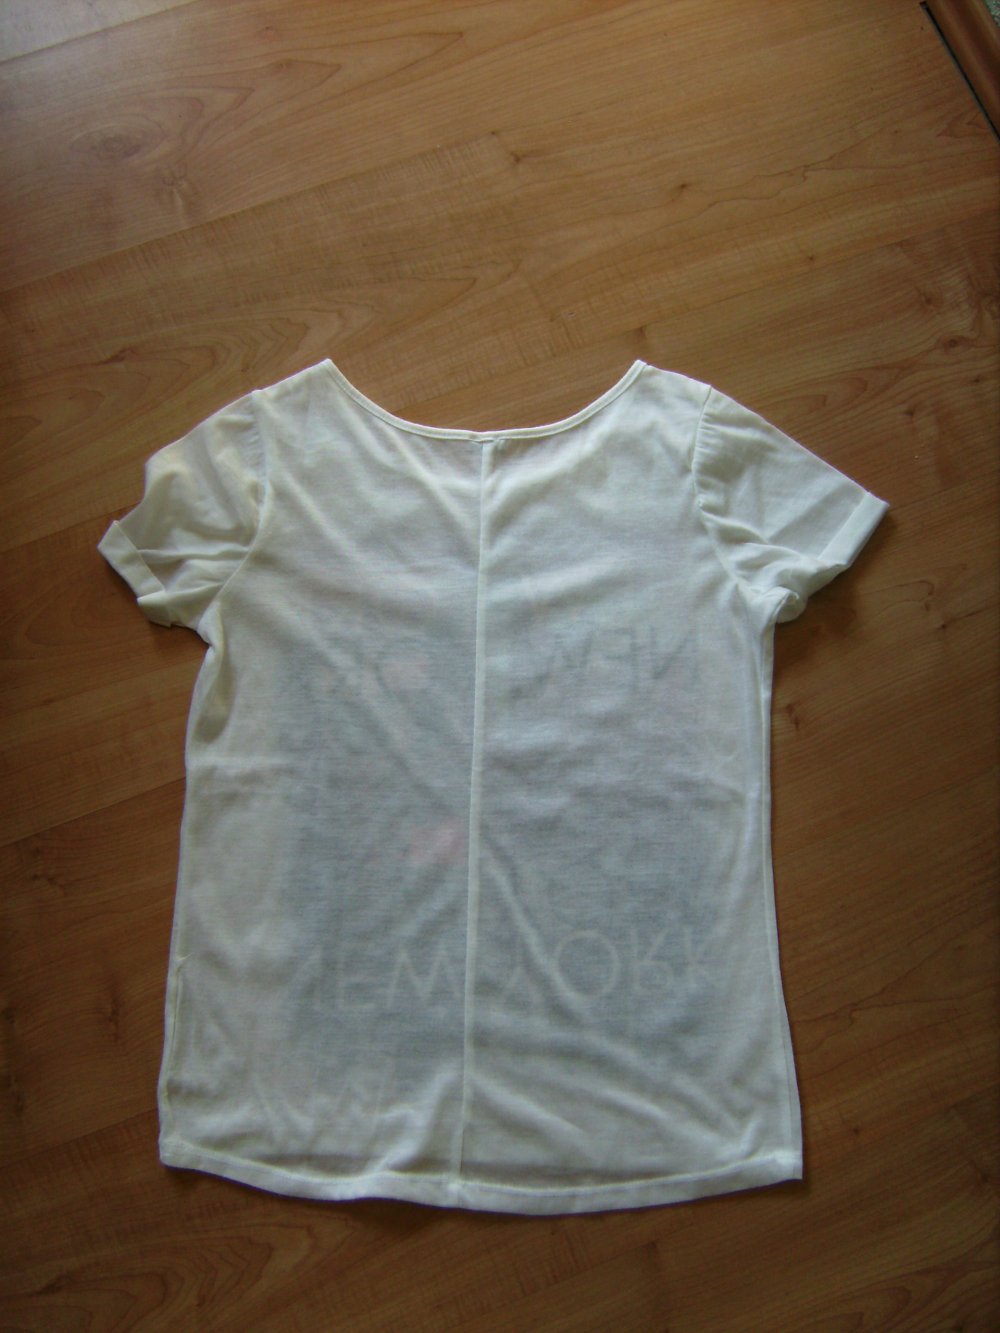 Shirt New York XS/S T-shirt Printdruck Glam Inprint Fotodruck Skyline 36/38 weiß semitransparent Kurzarm Fotoprint by Night